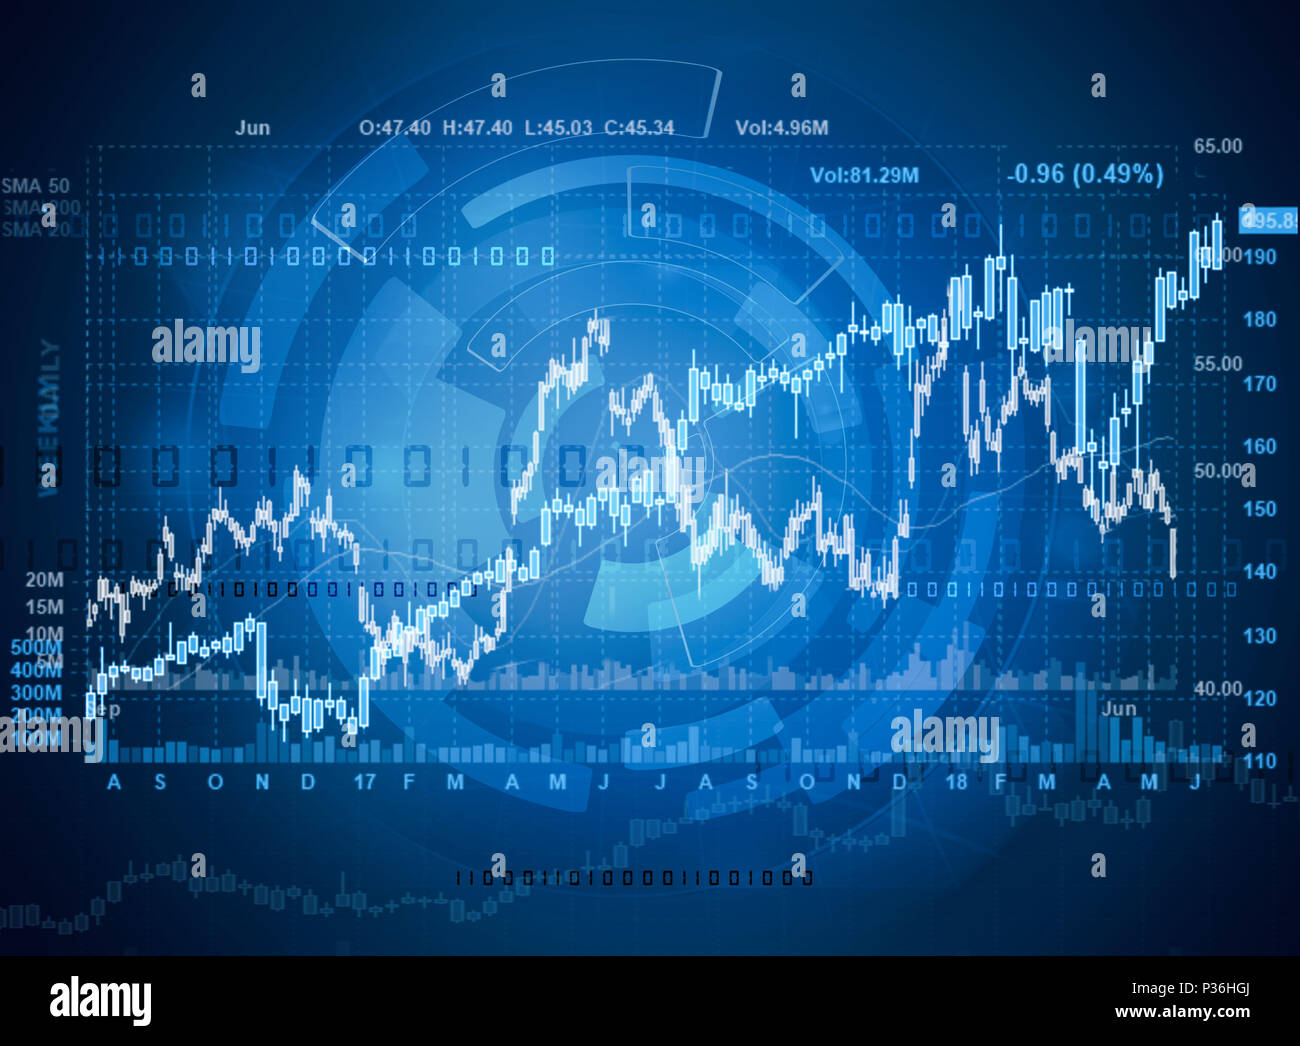 stock market data Stock Photo